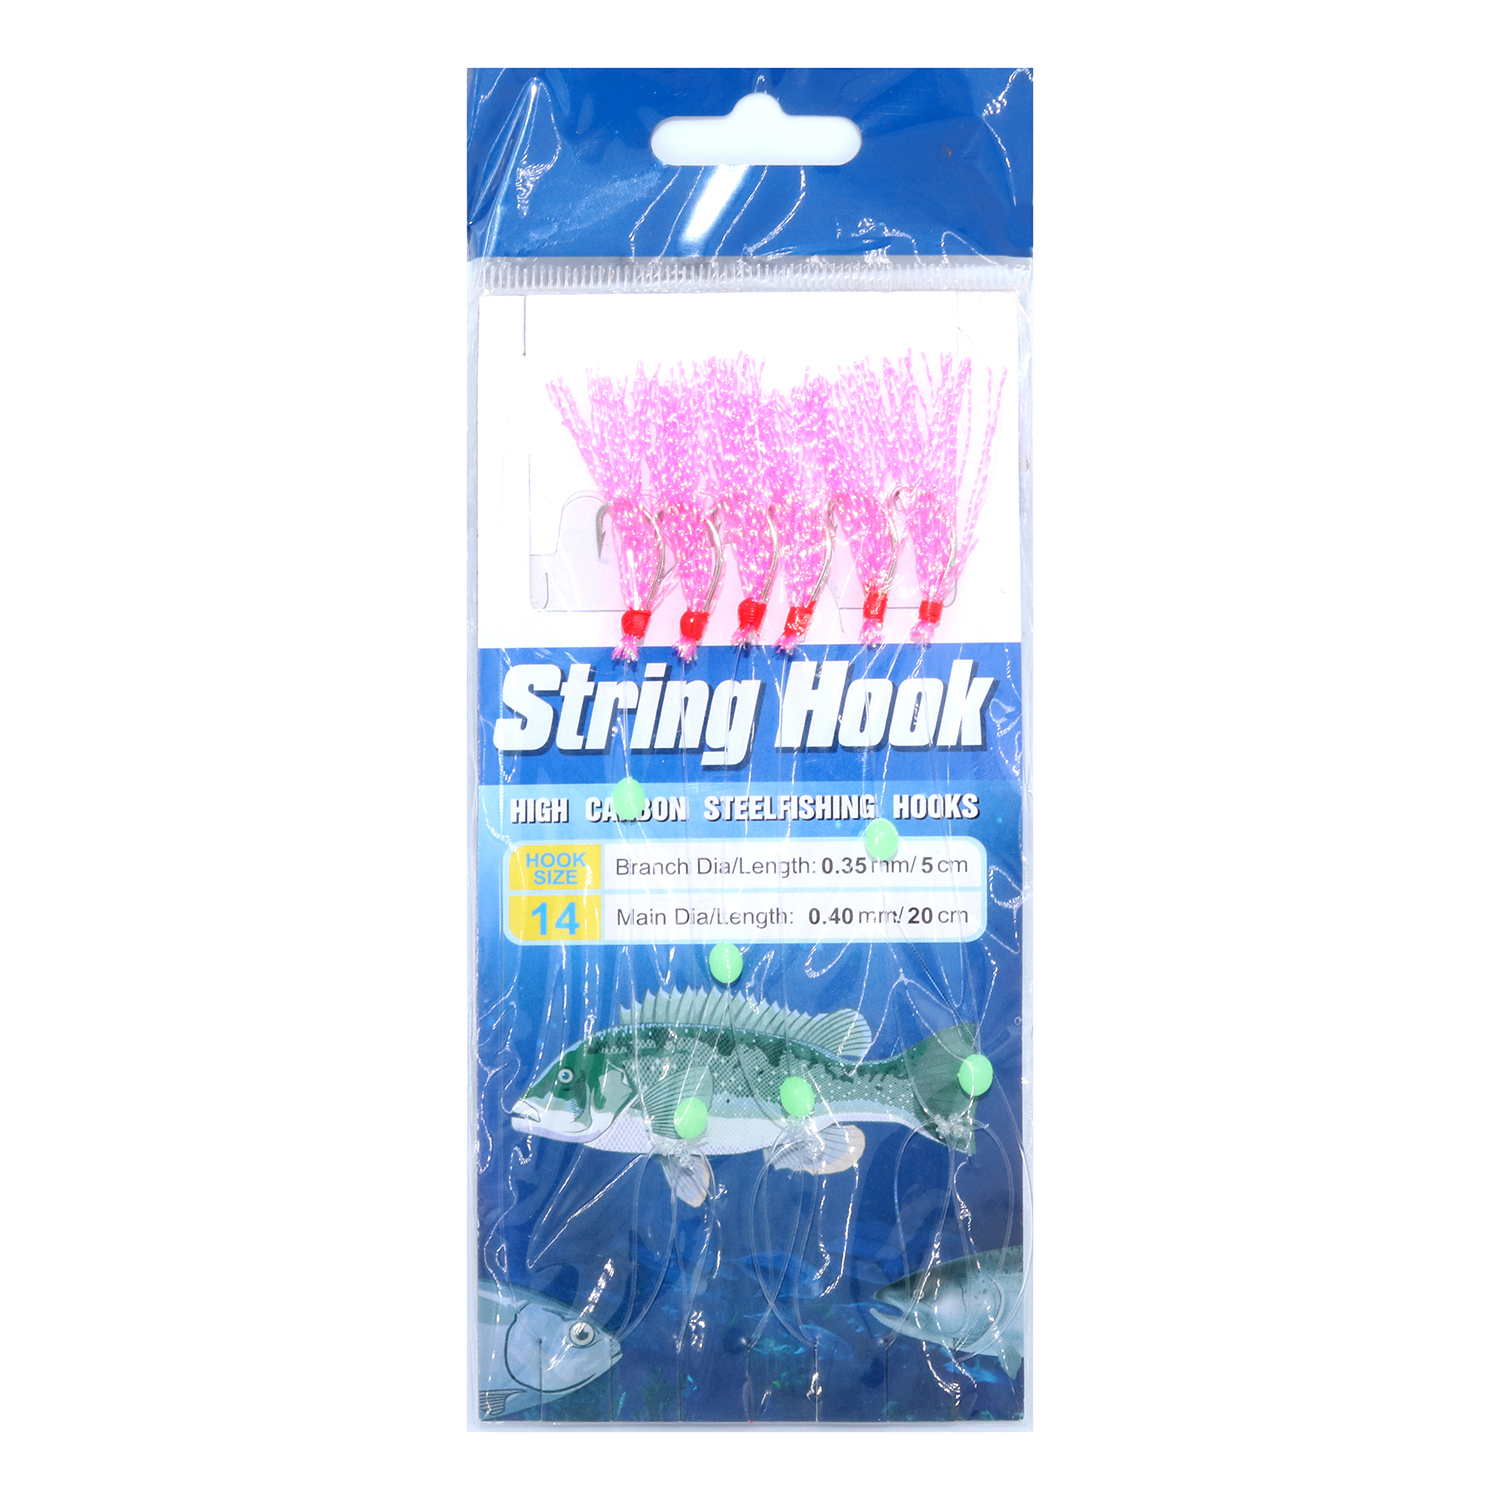 fulljion string with 6 fishhooks red color